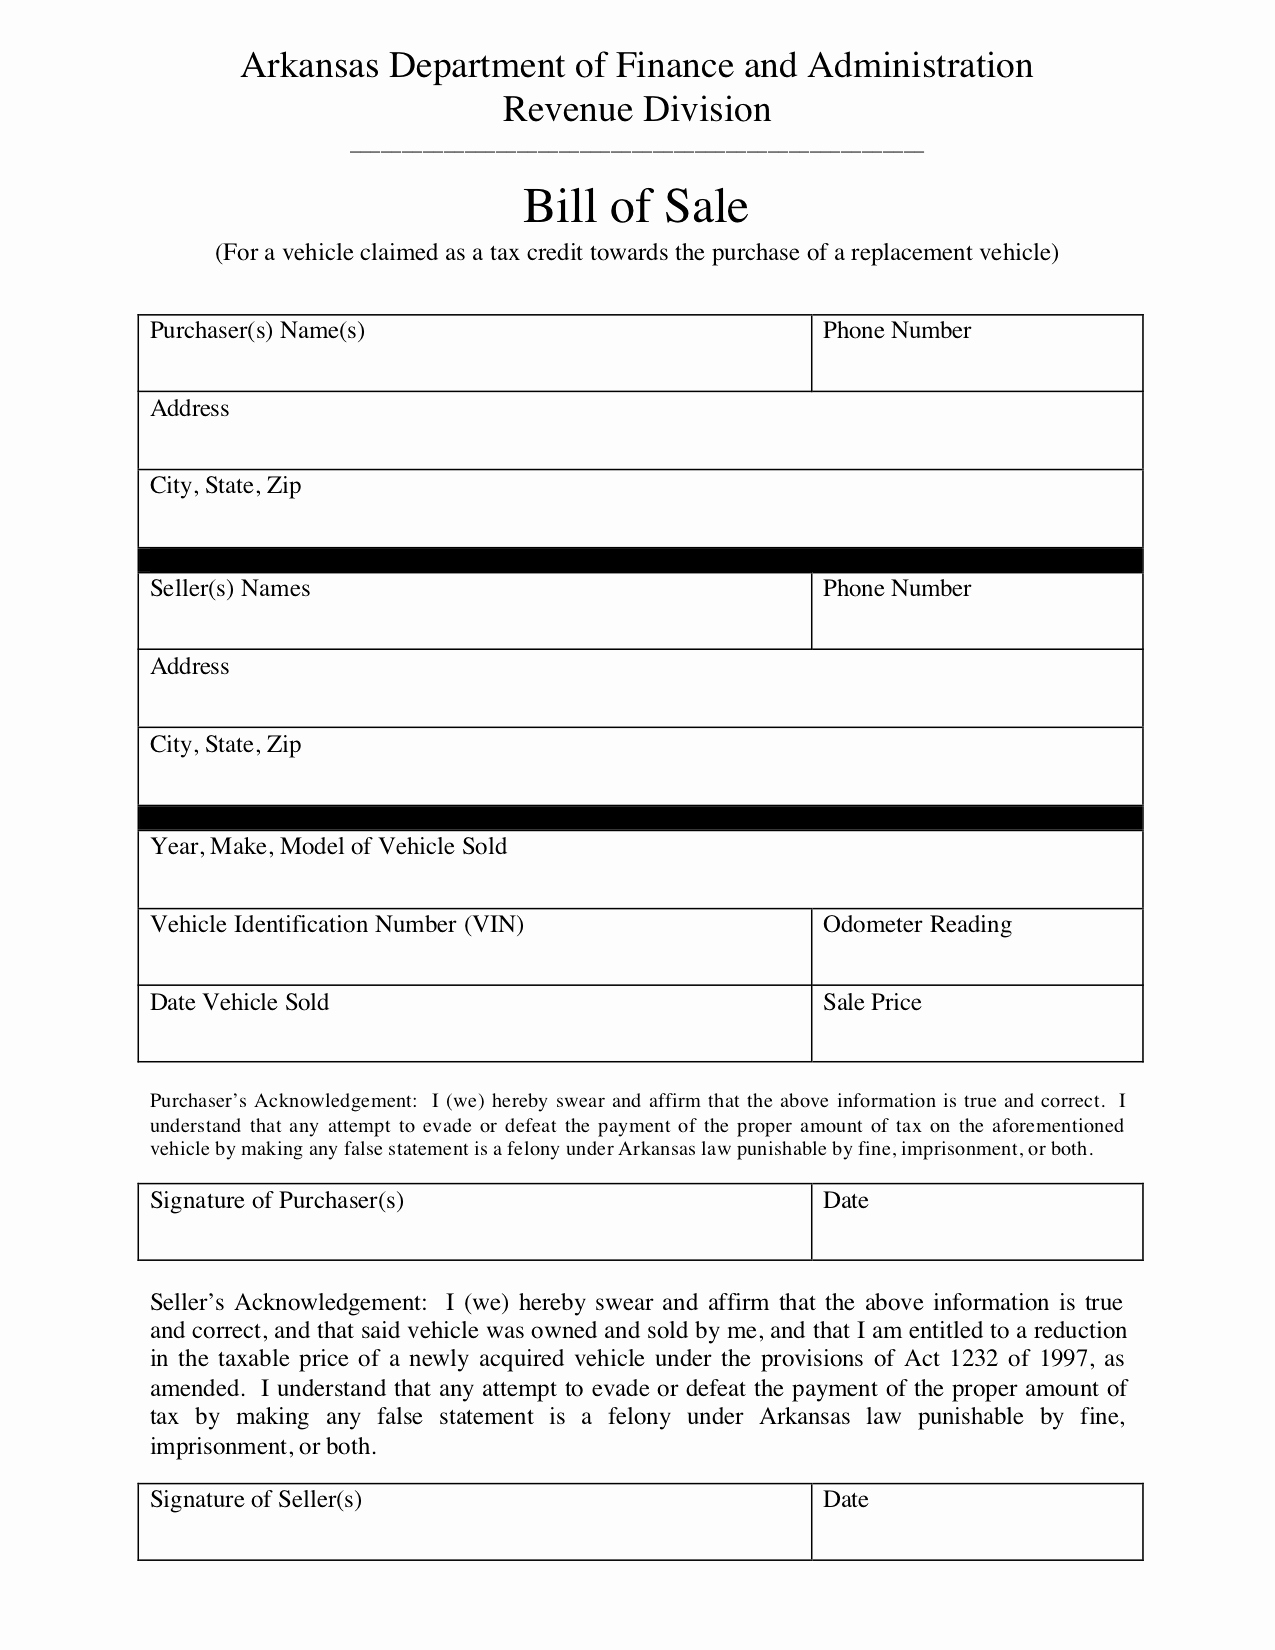 Colorado Auto Bill Of Sale Fresh Free Arkansas Bill Of Sale form Pdf Template